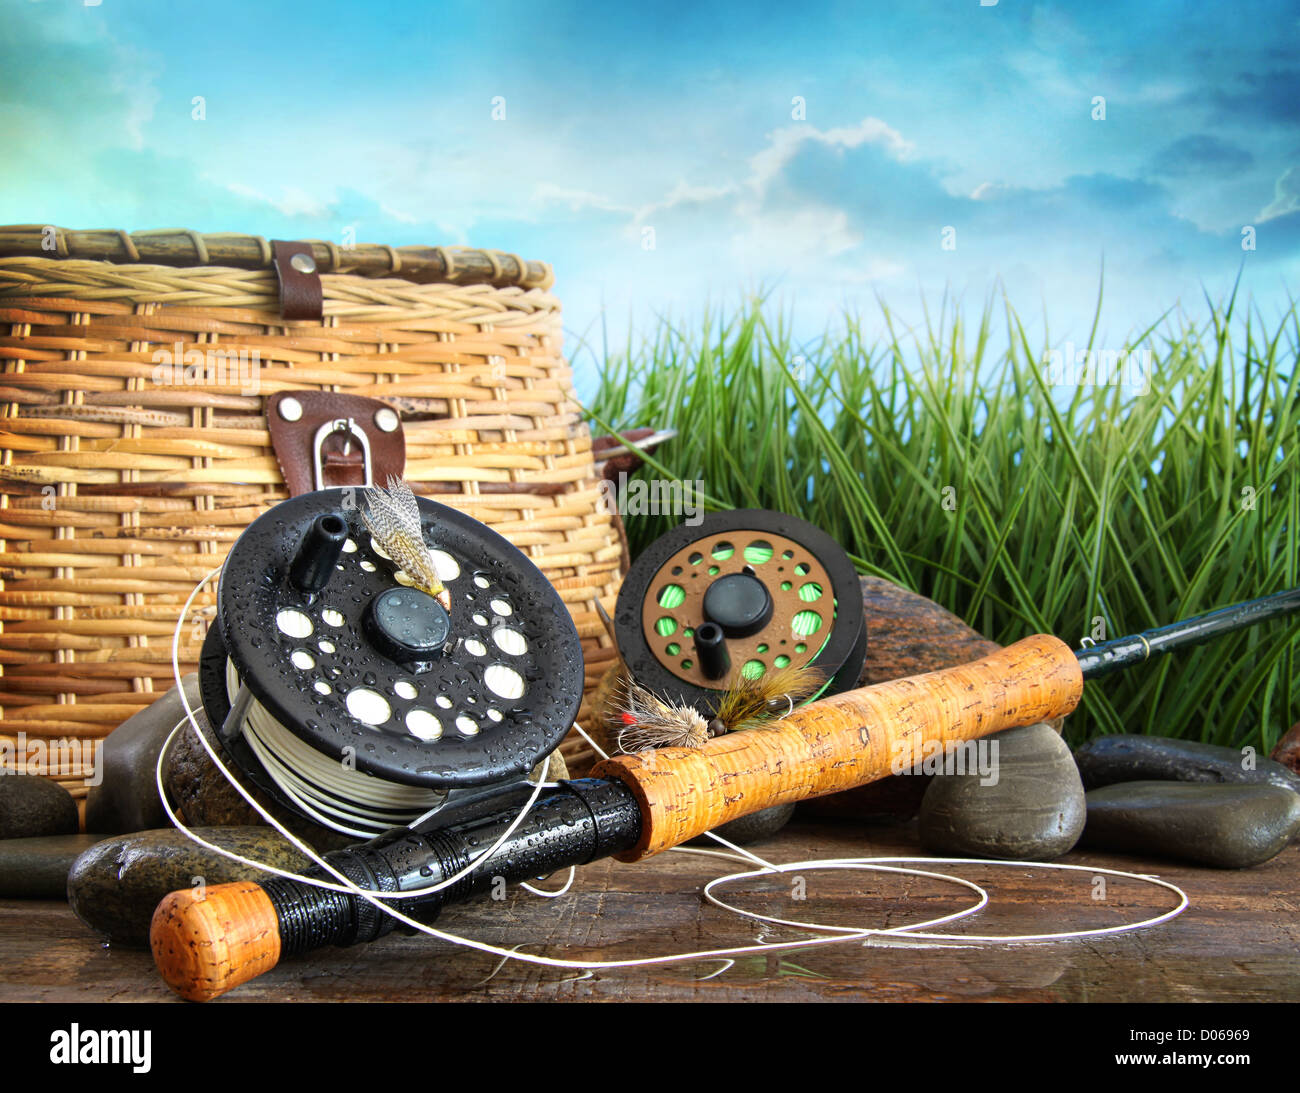 https://c8.alamy.com/comp/D06969/closeup-of-fly-fishing-equipment-and-basket-D06969.jpg